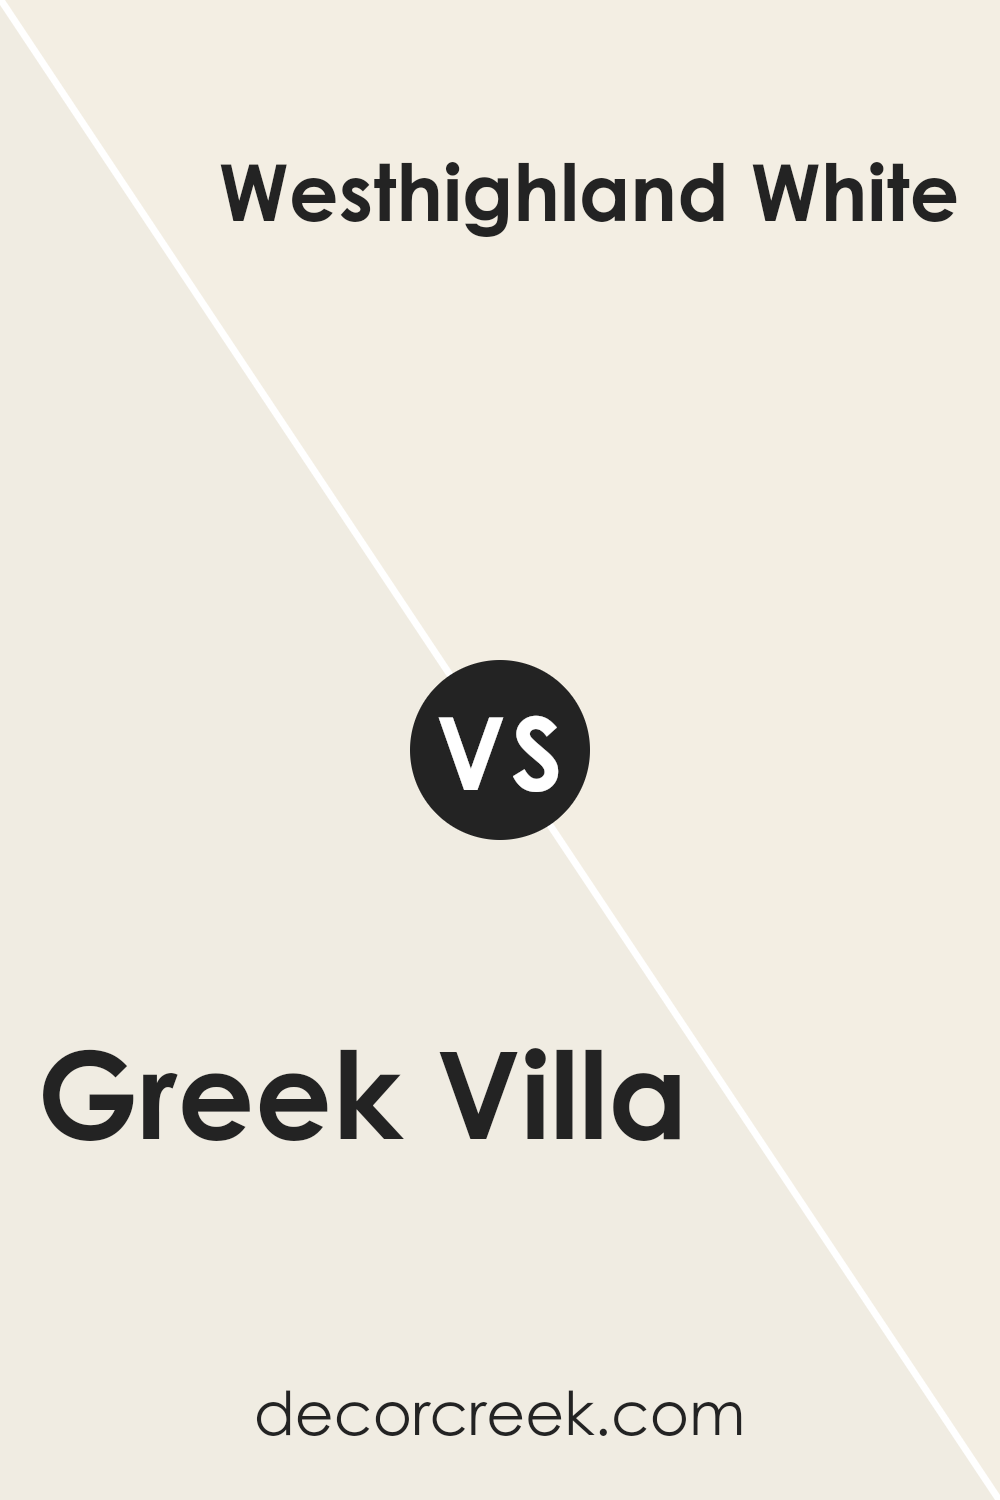 greek_villa_sw_7551_vs_westhighland_white_sw_7566